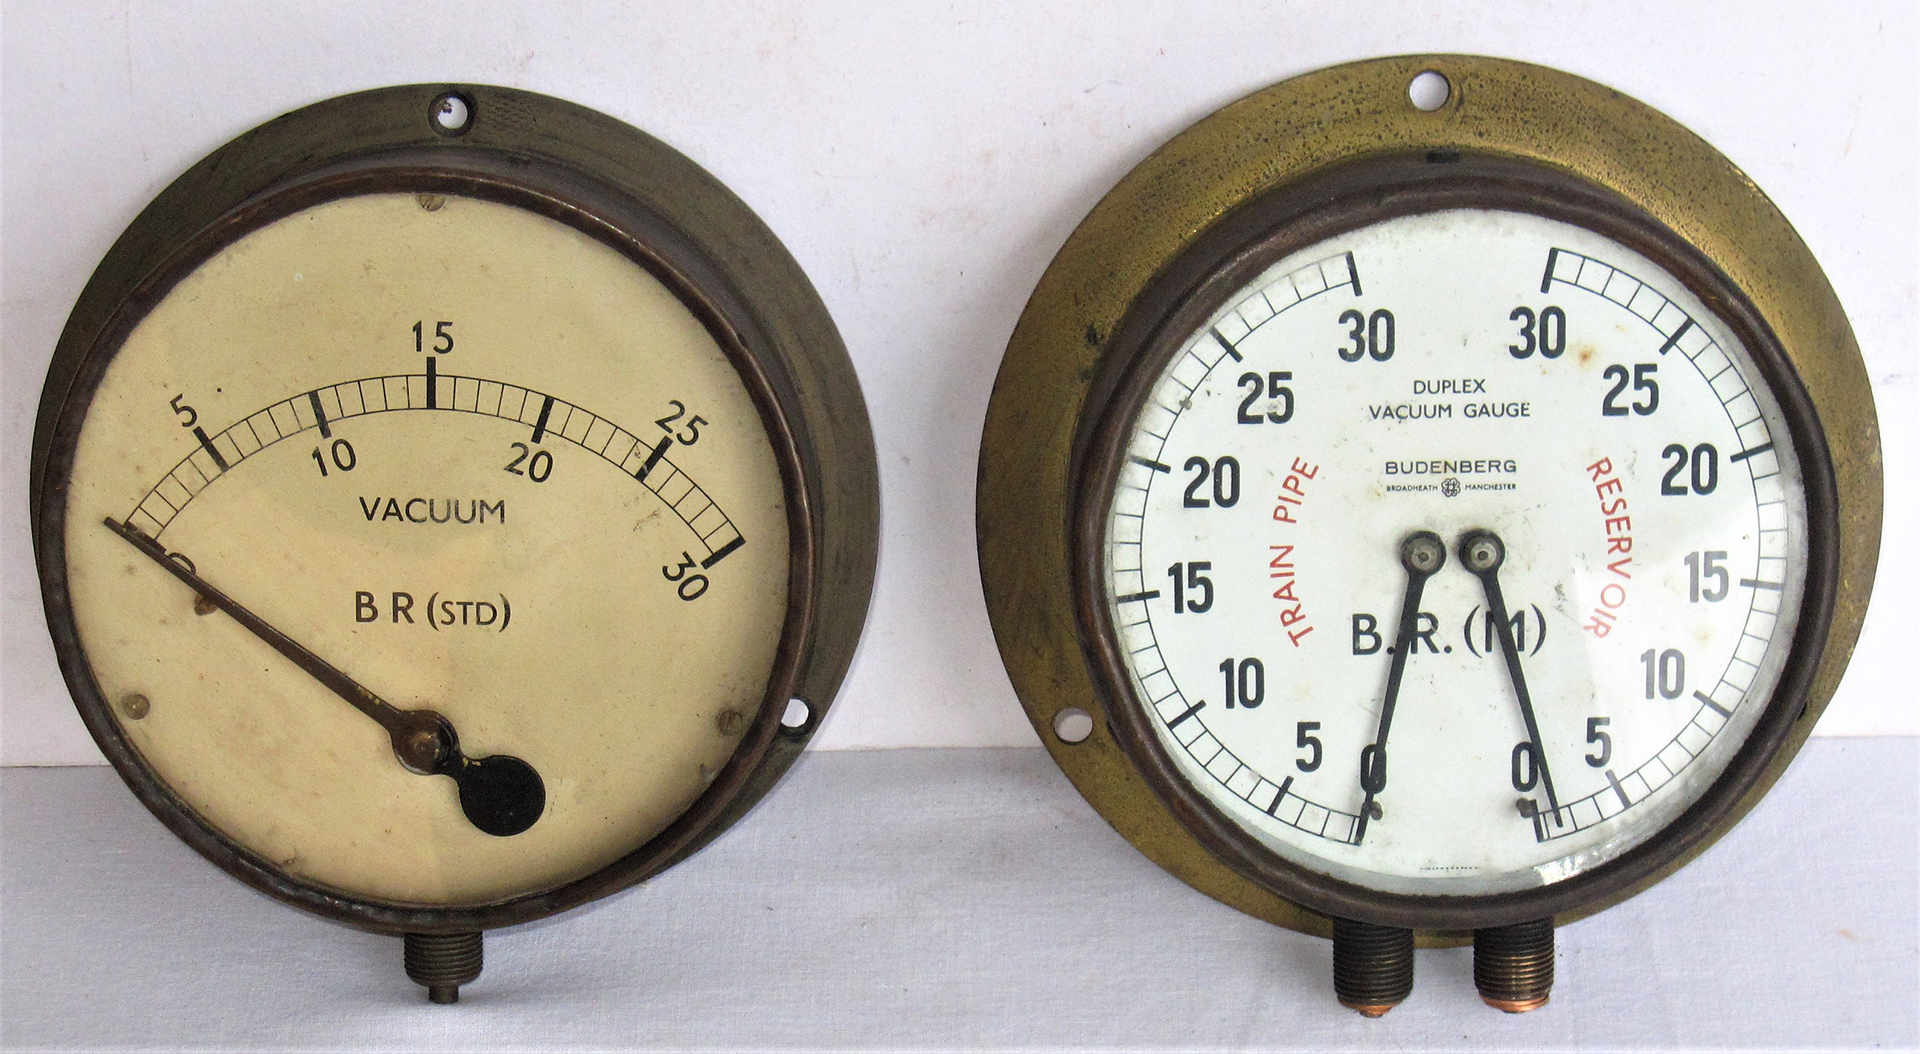 2 x Brass pressure gauges. BR Standard vacuum gauge 0 - 30 in/hg together with BR(M) Train pipe